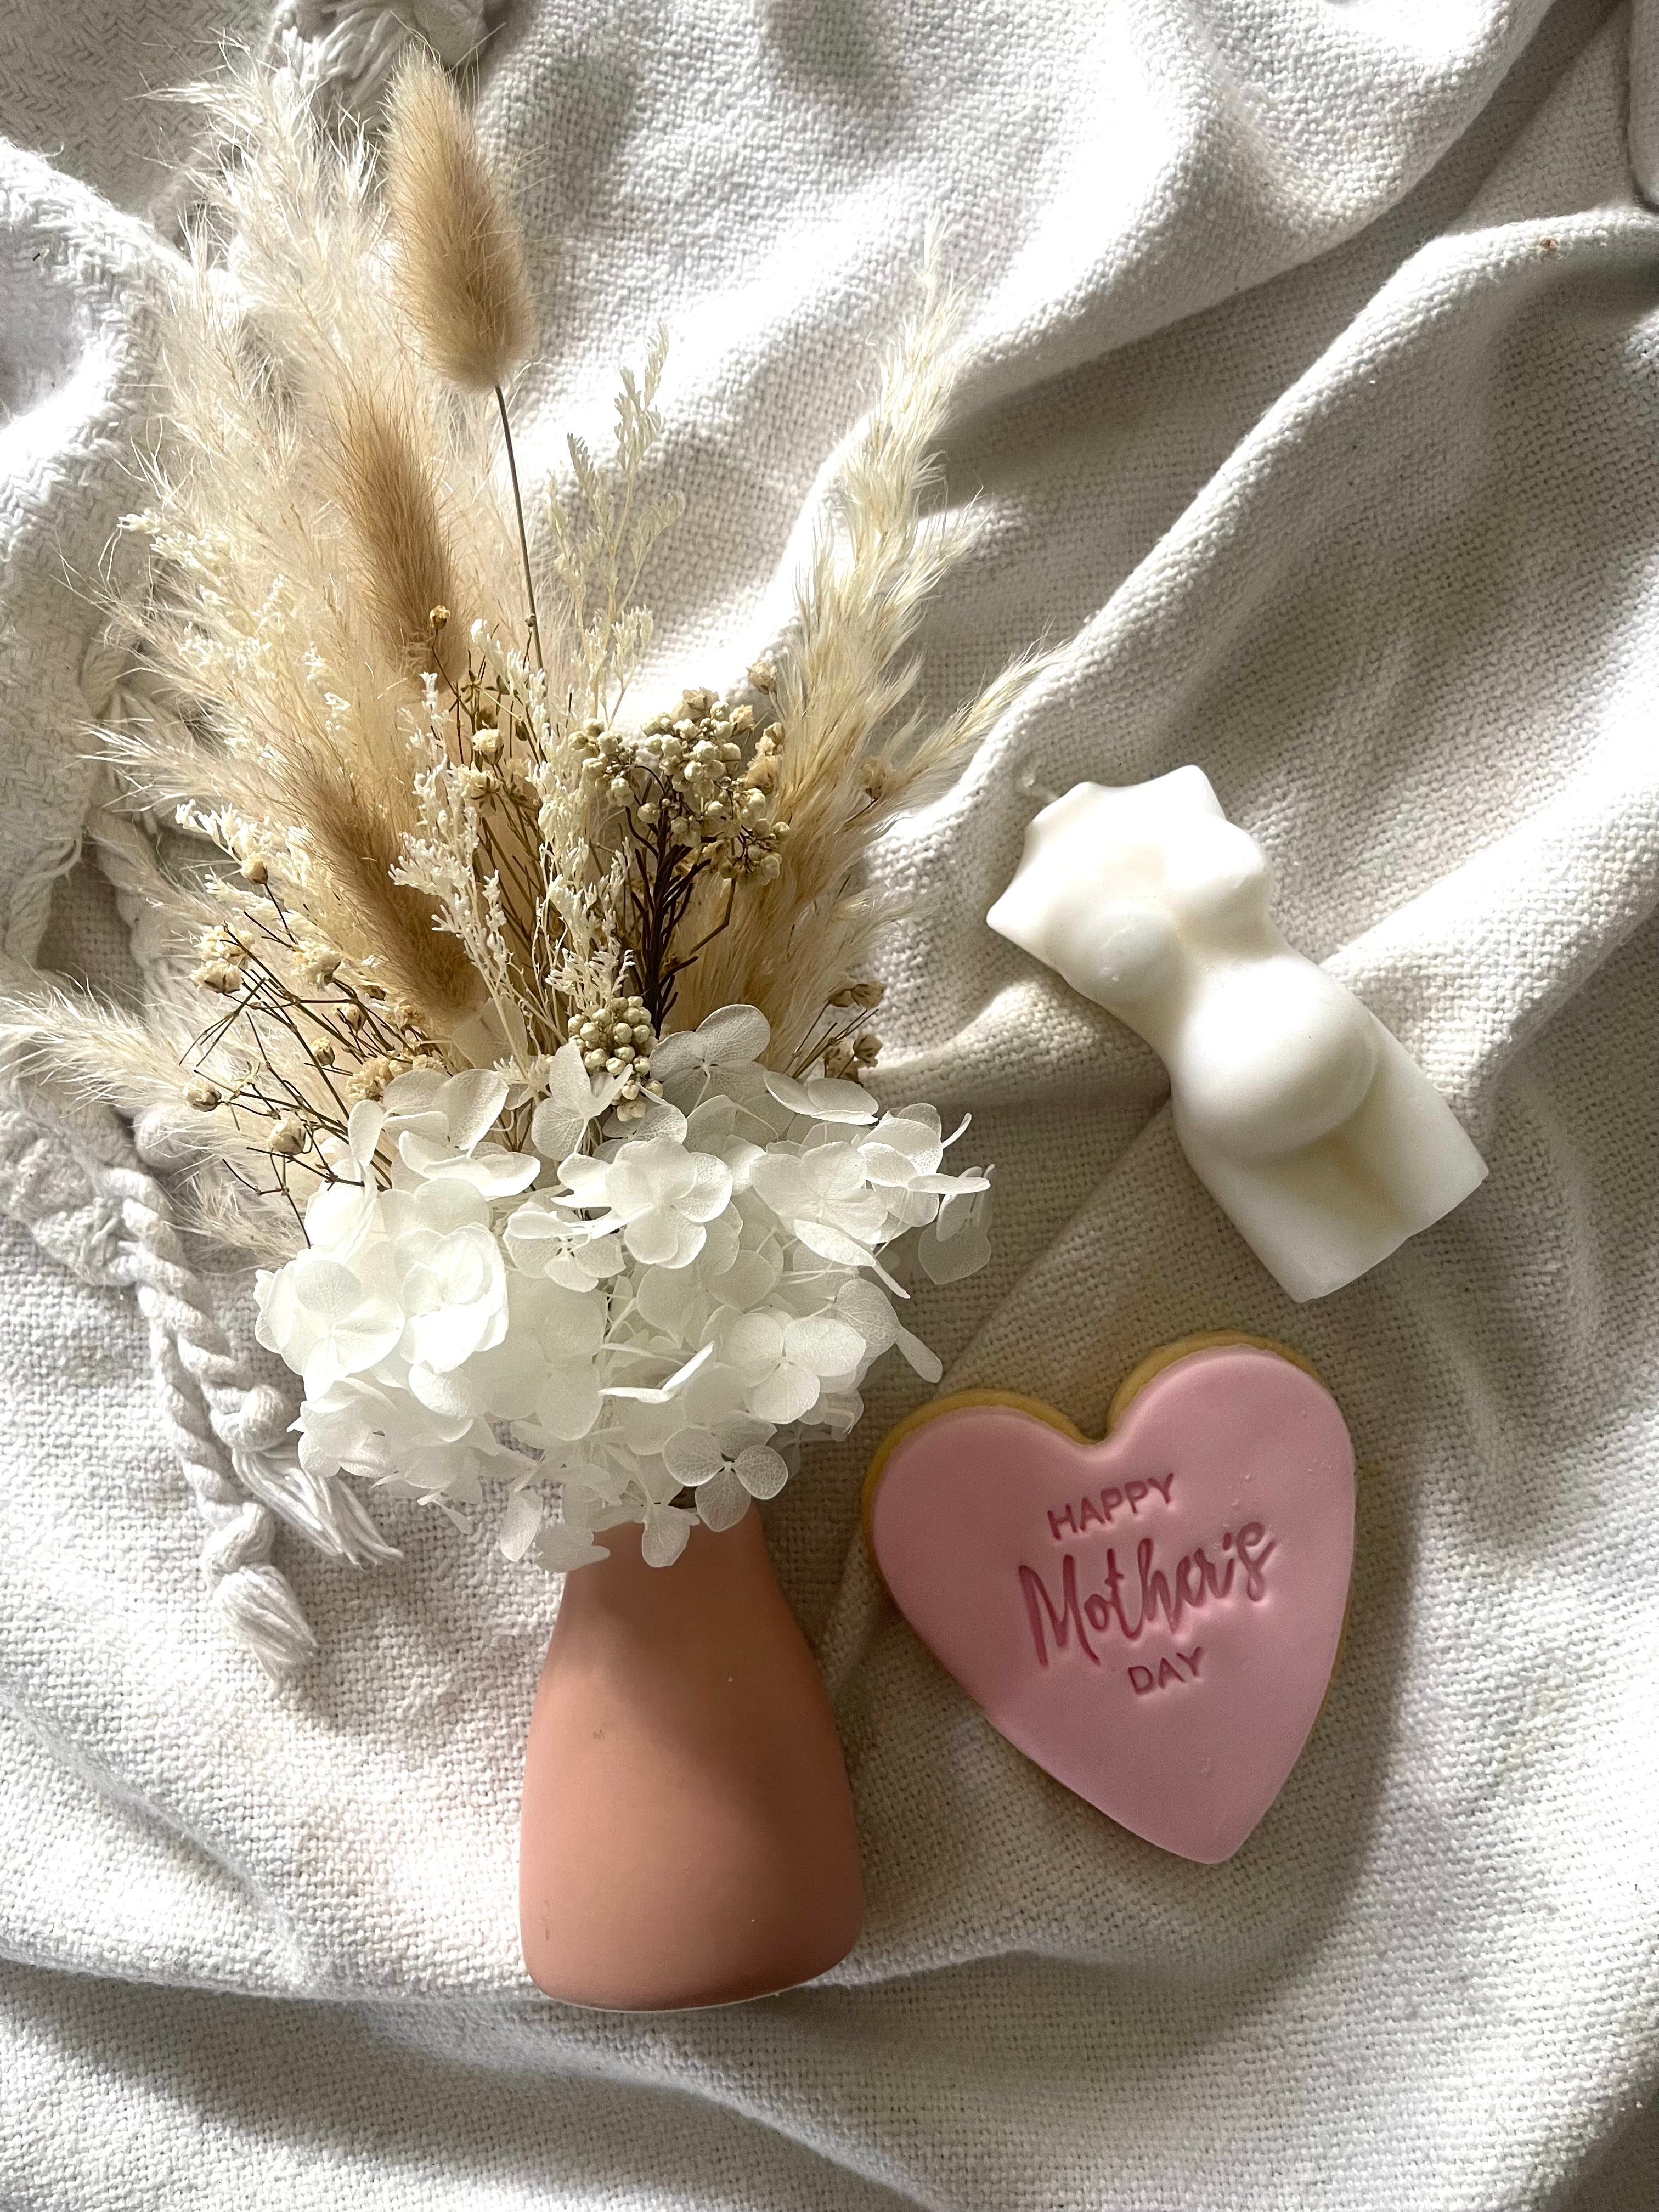 Mini Happy Mothers day gift box. - Mumma-To-Be.